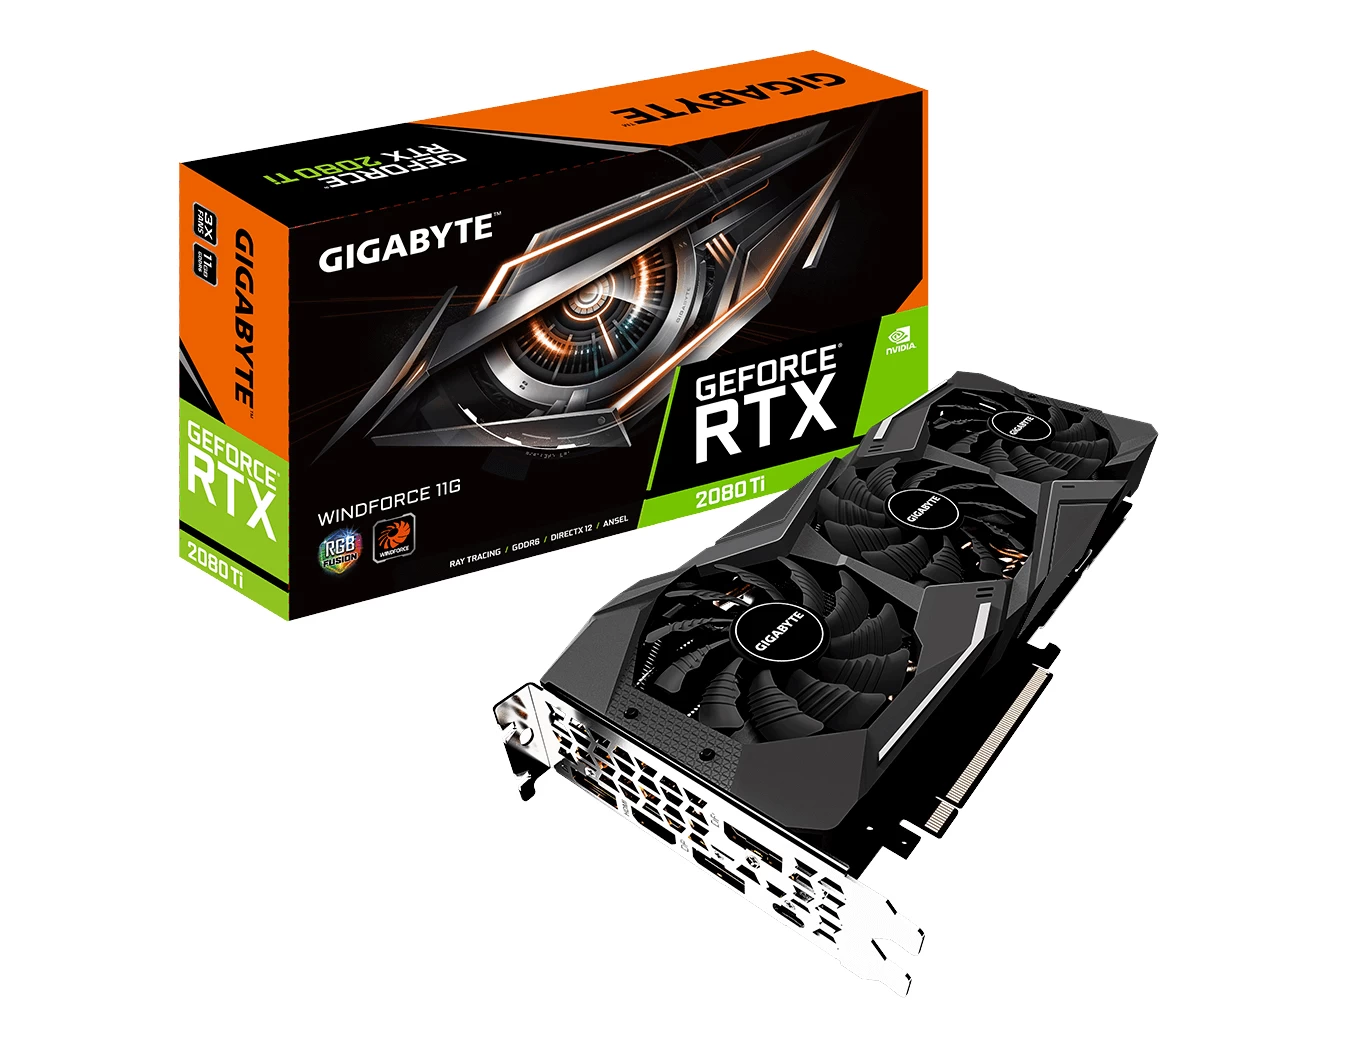 GIGABYTE GeForce RTX 2080 Ti WINDFORCE 11G Package